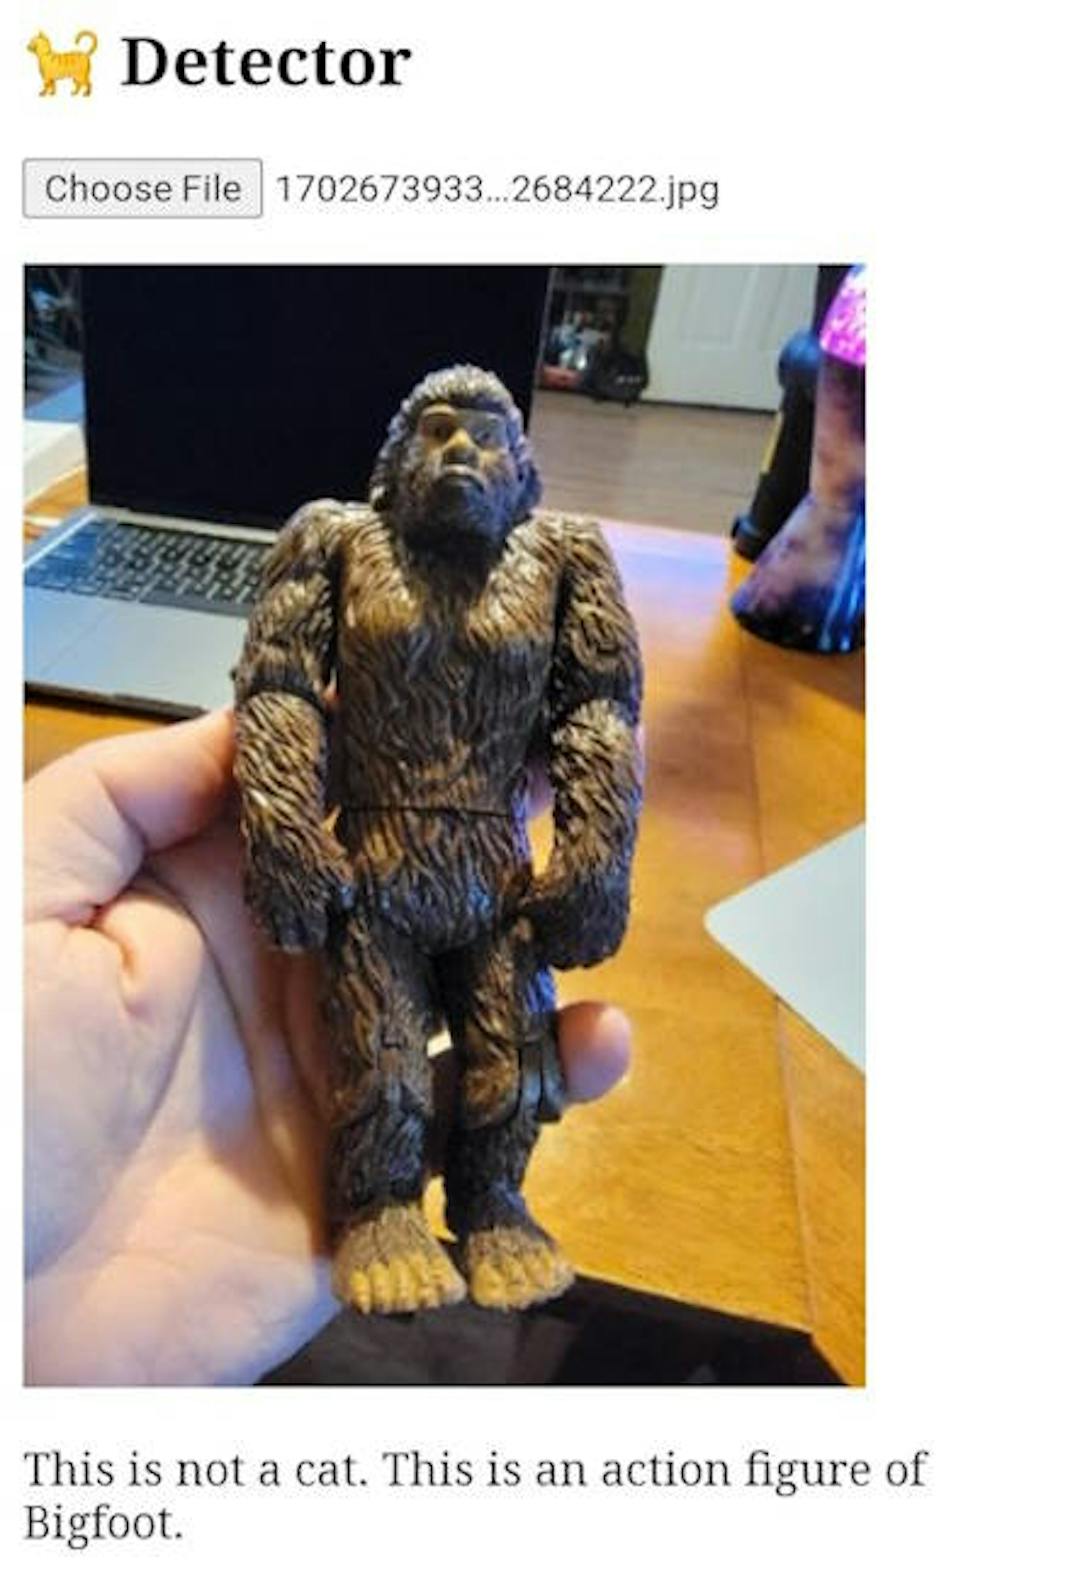 Une photo d'une figurine Bigfoot